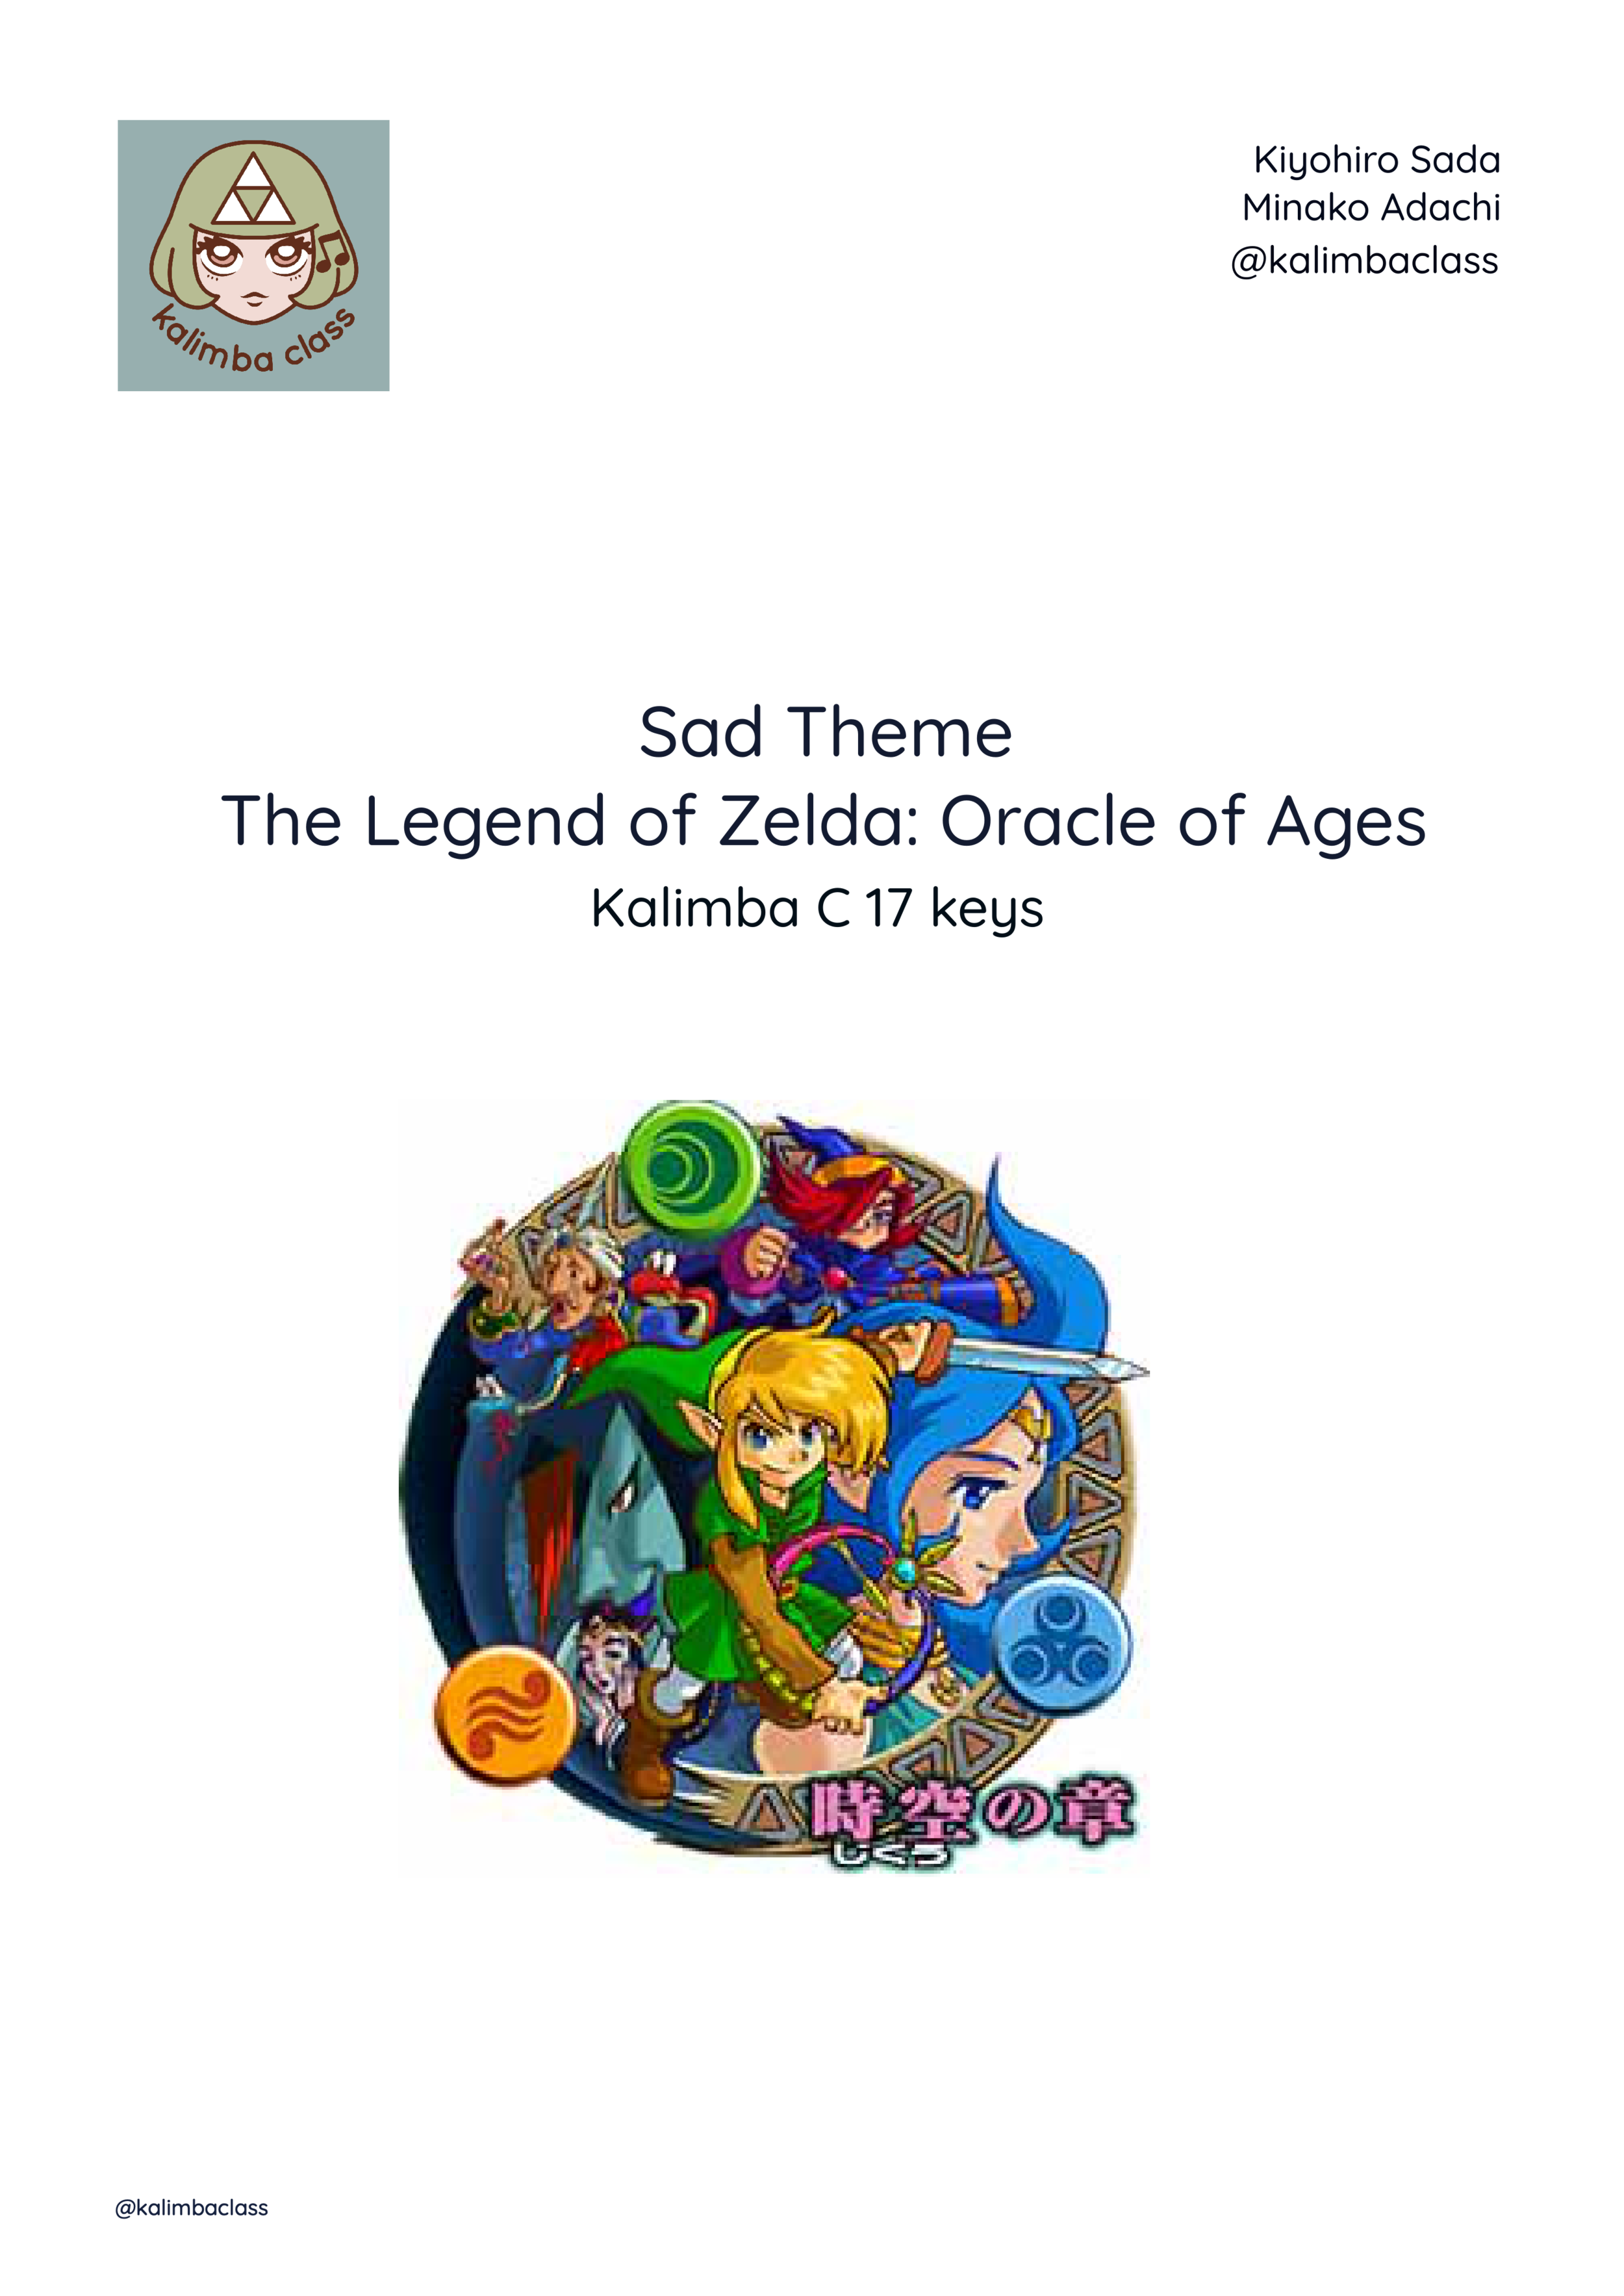 Sad Theme, The Legend of Zelda: Oracle of Ages - Kiyohiro Sada and Minko Adachi